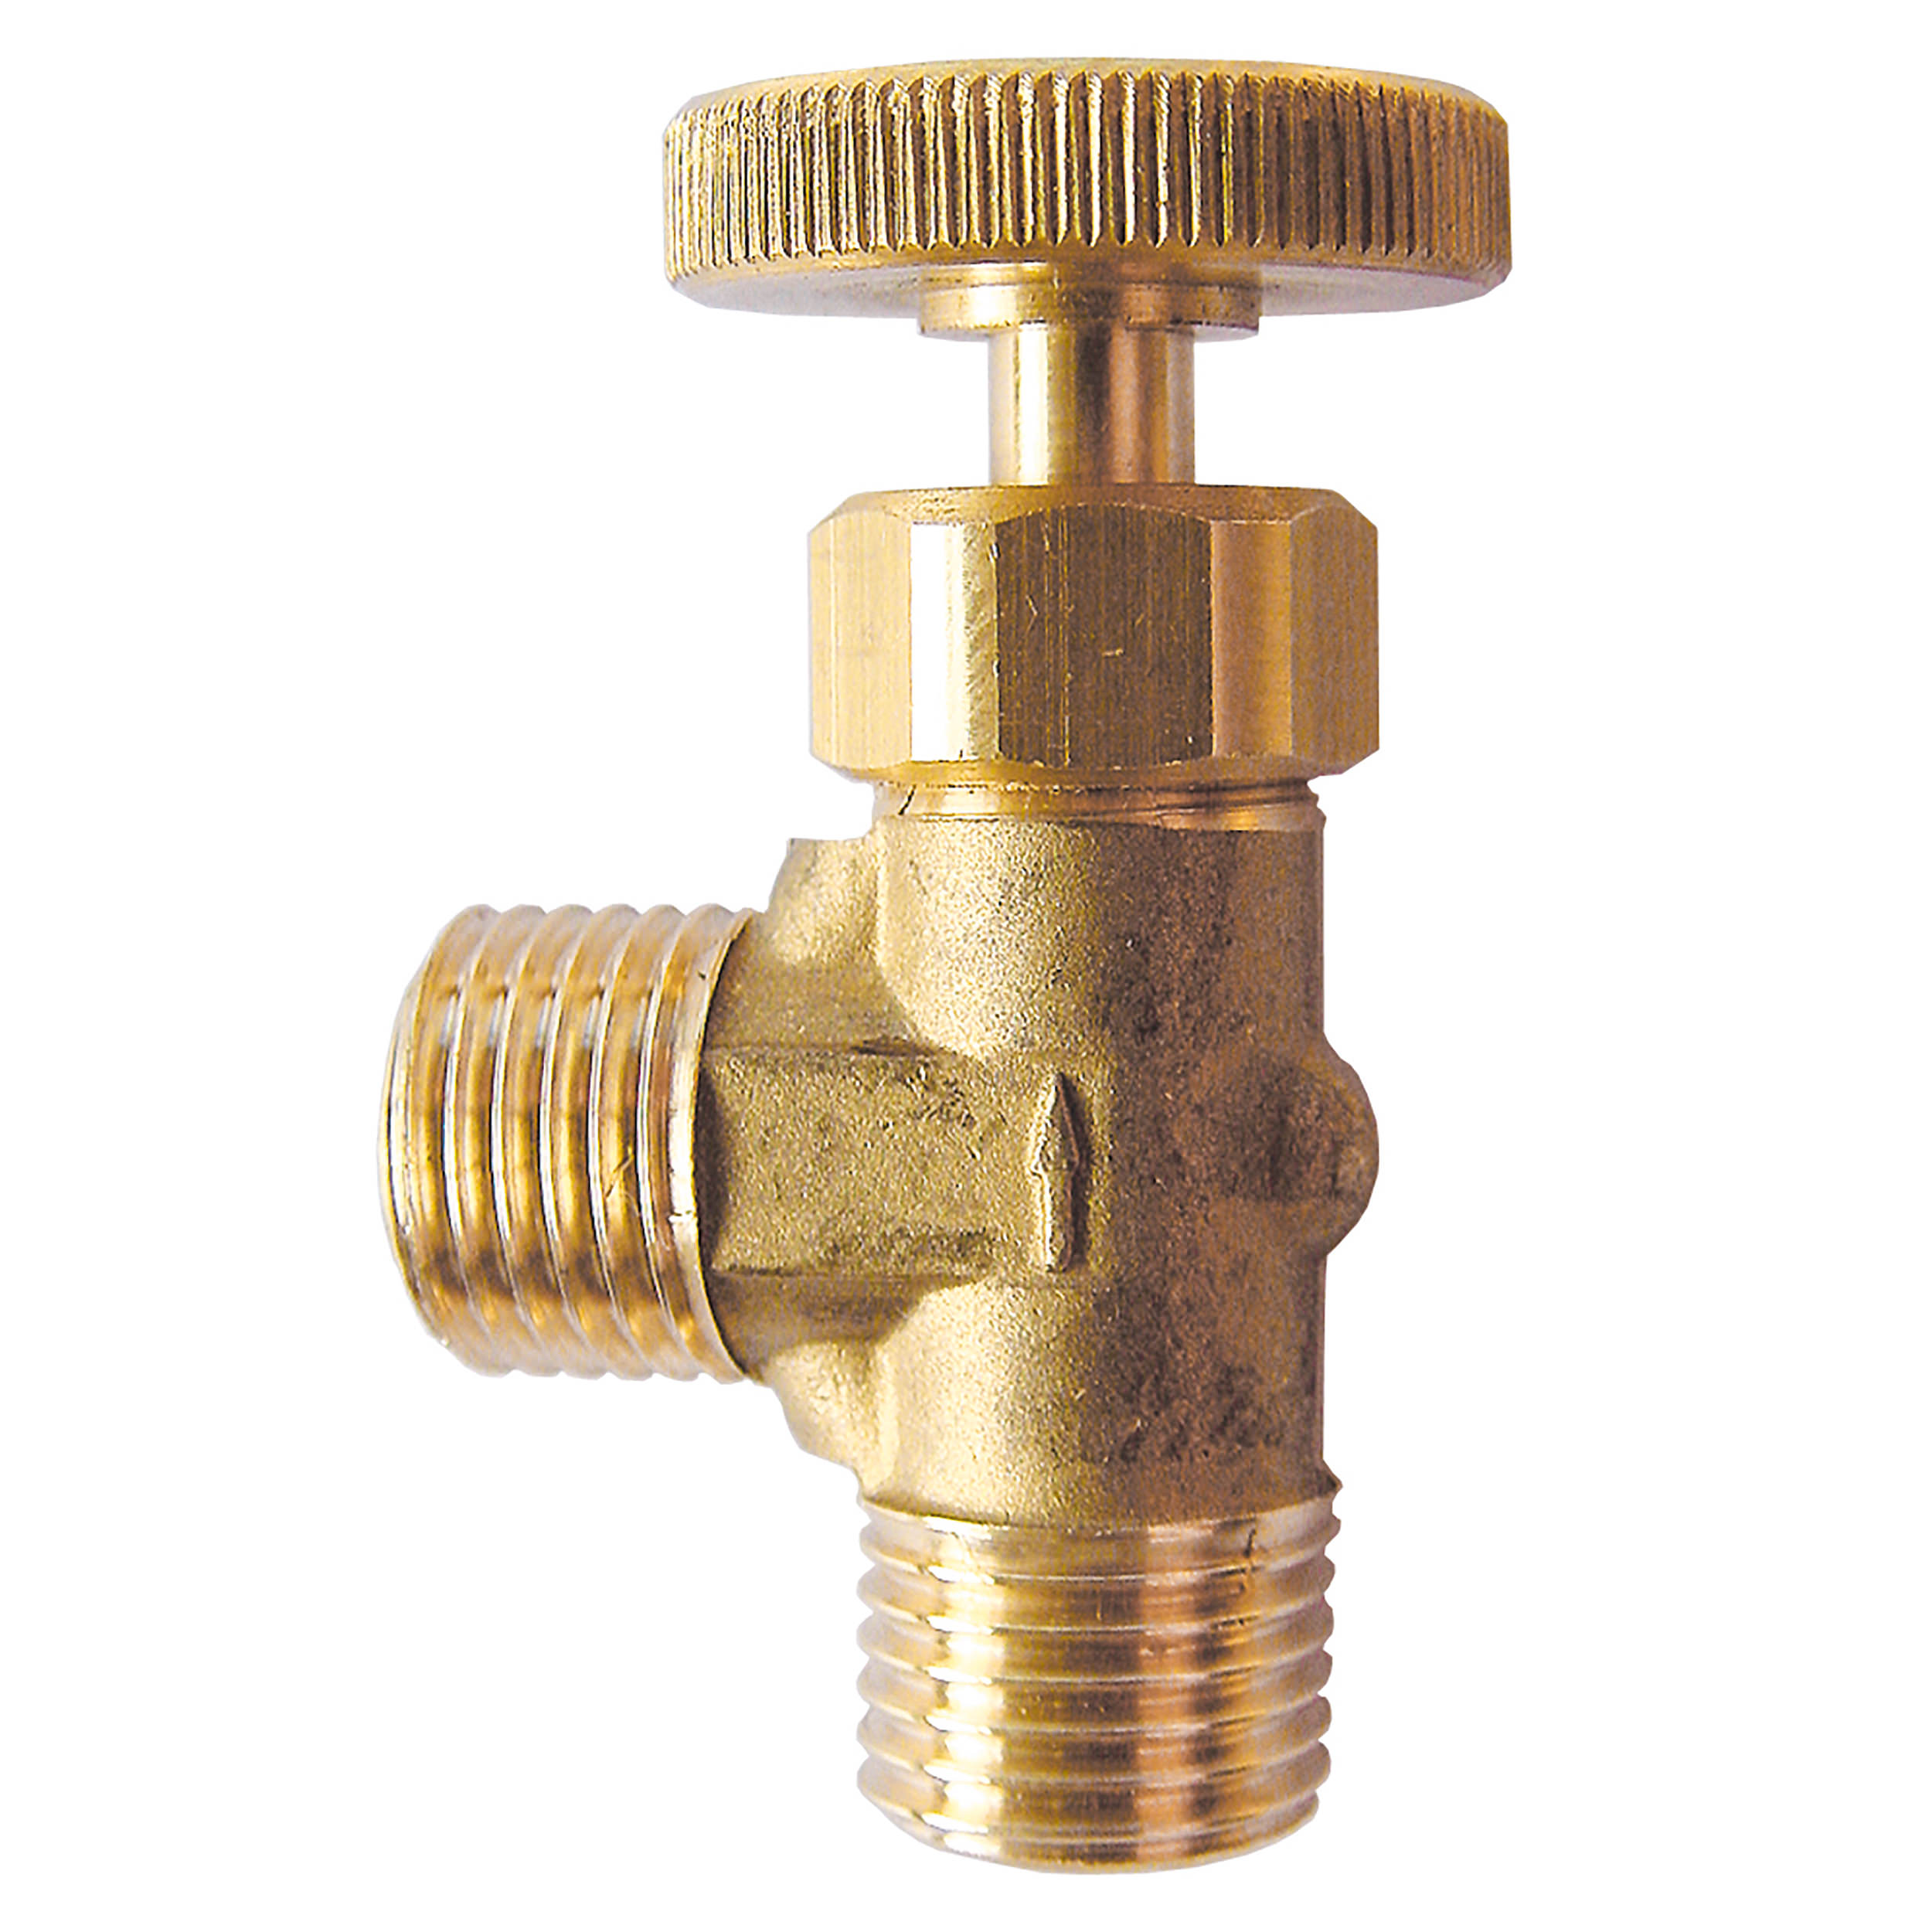 Shut-off valve, elbow-shaped, male thread